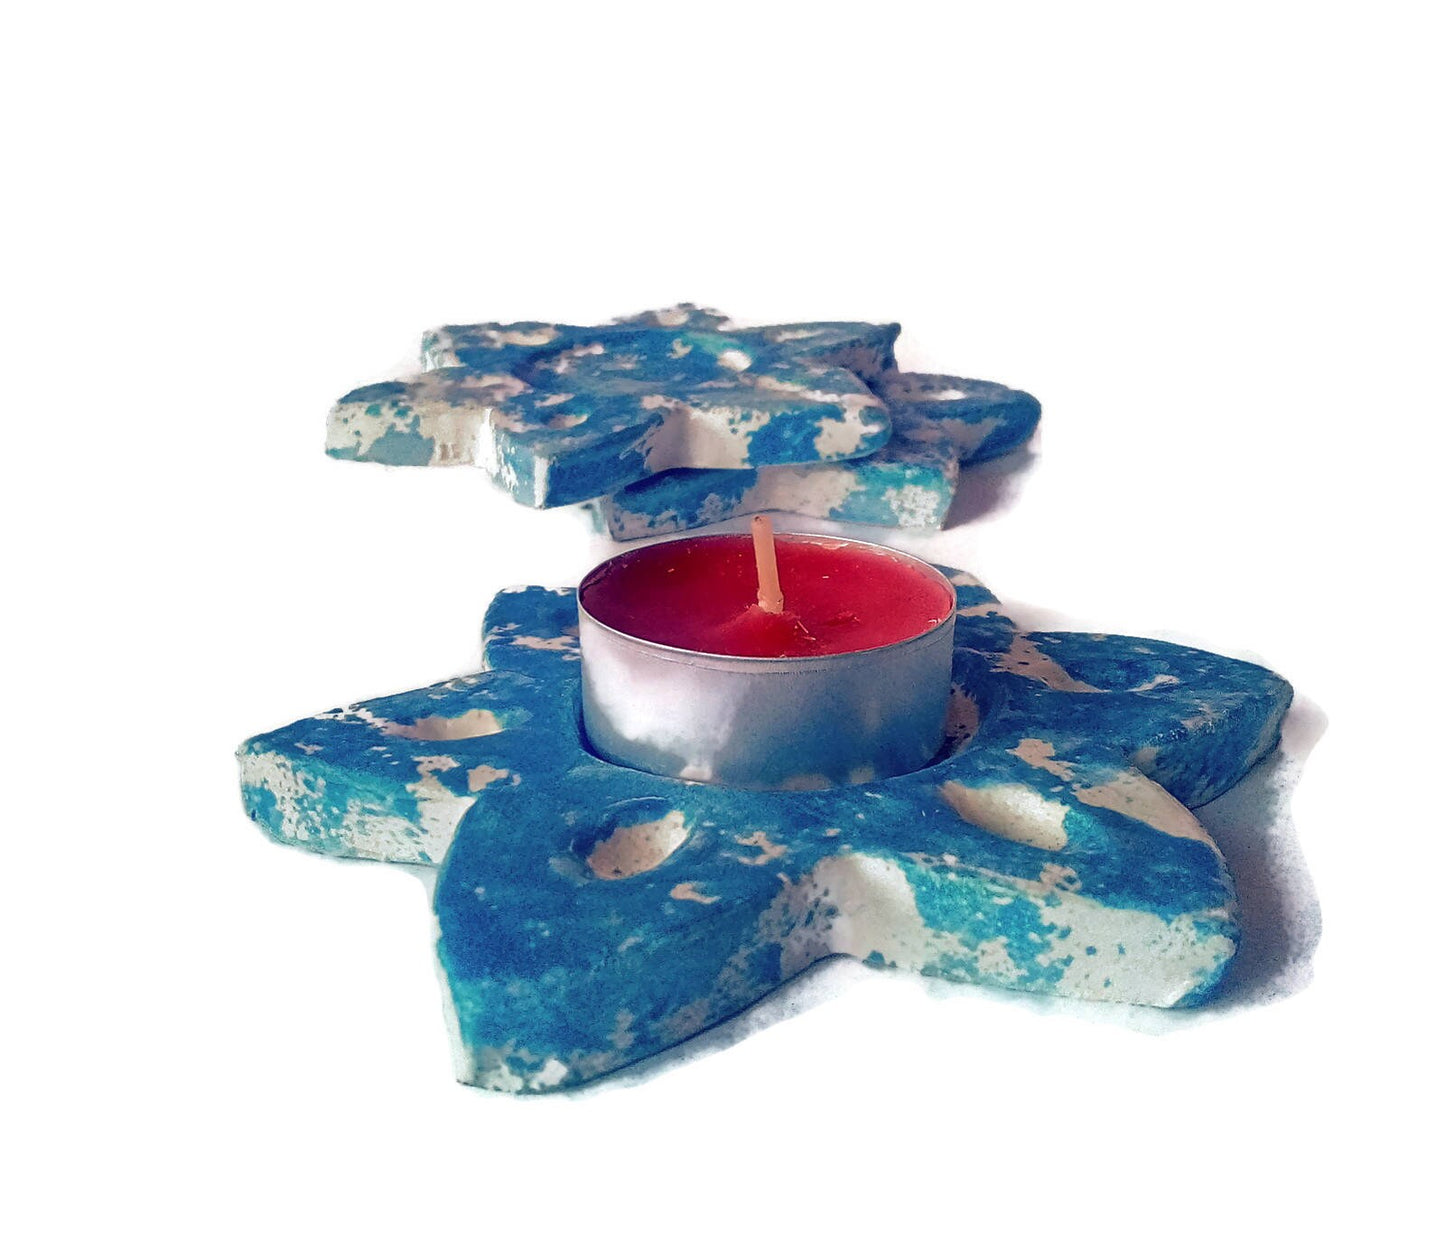 Handmade Ceramic Star Candle Holder For Home Decor, Office Desk Accessories For Her, Artisan Pottery Tealight Holder, Gift Idea For Women - Ceramica Ana Rafael